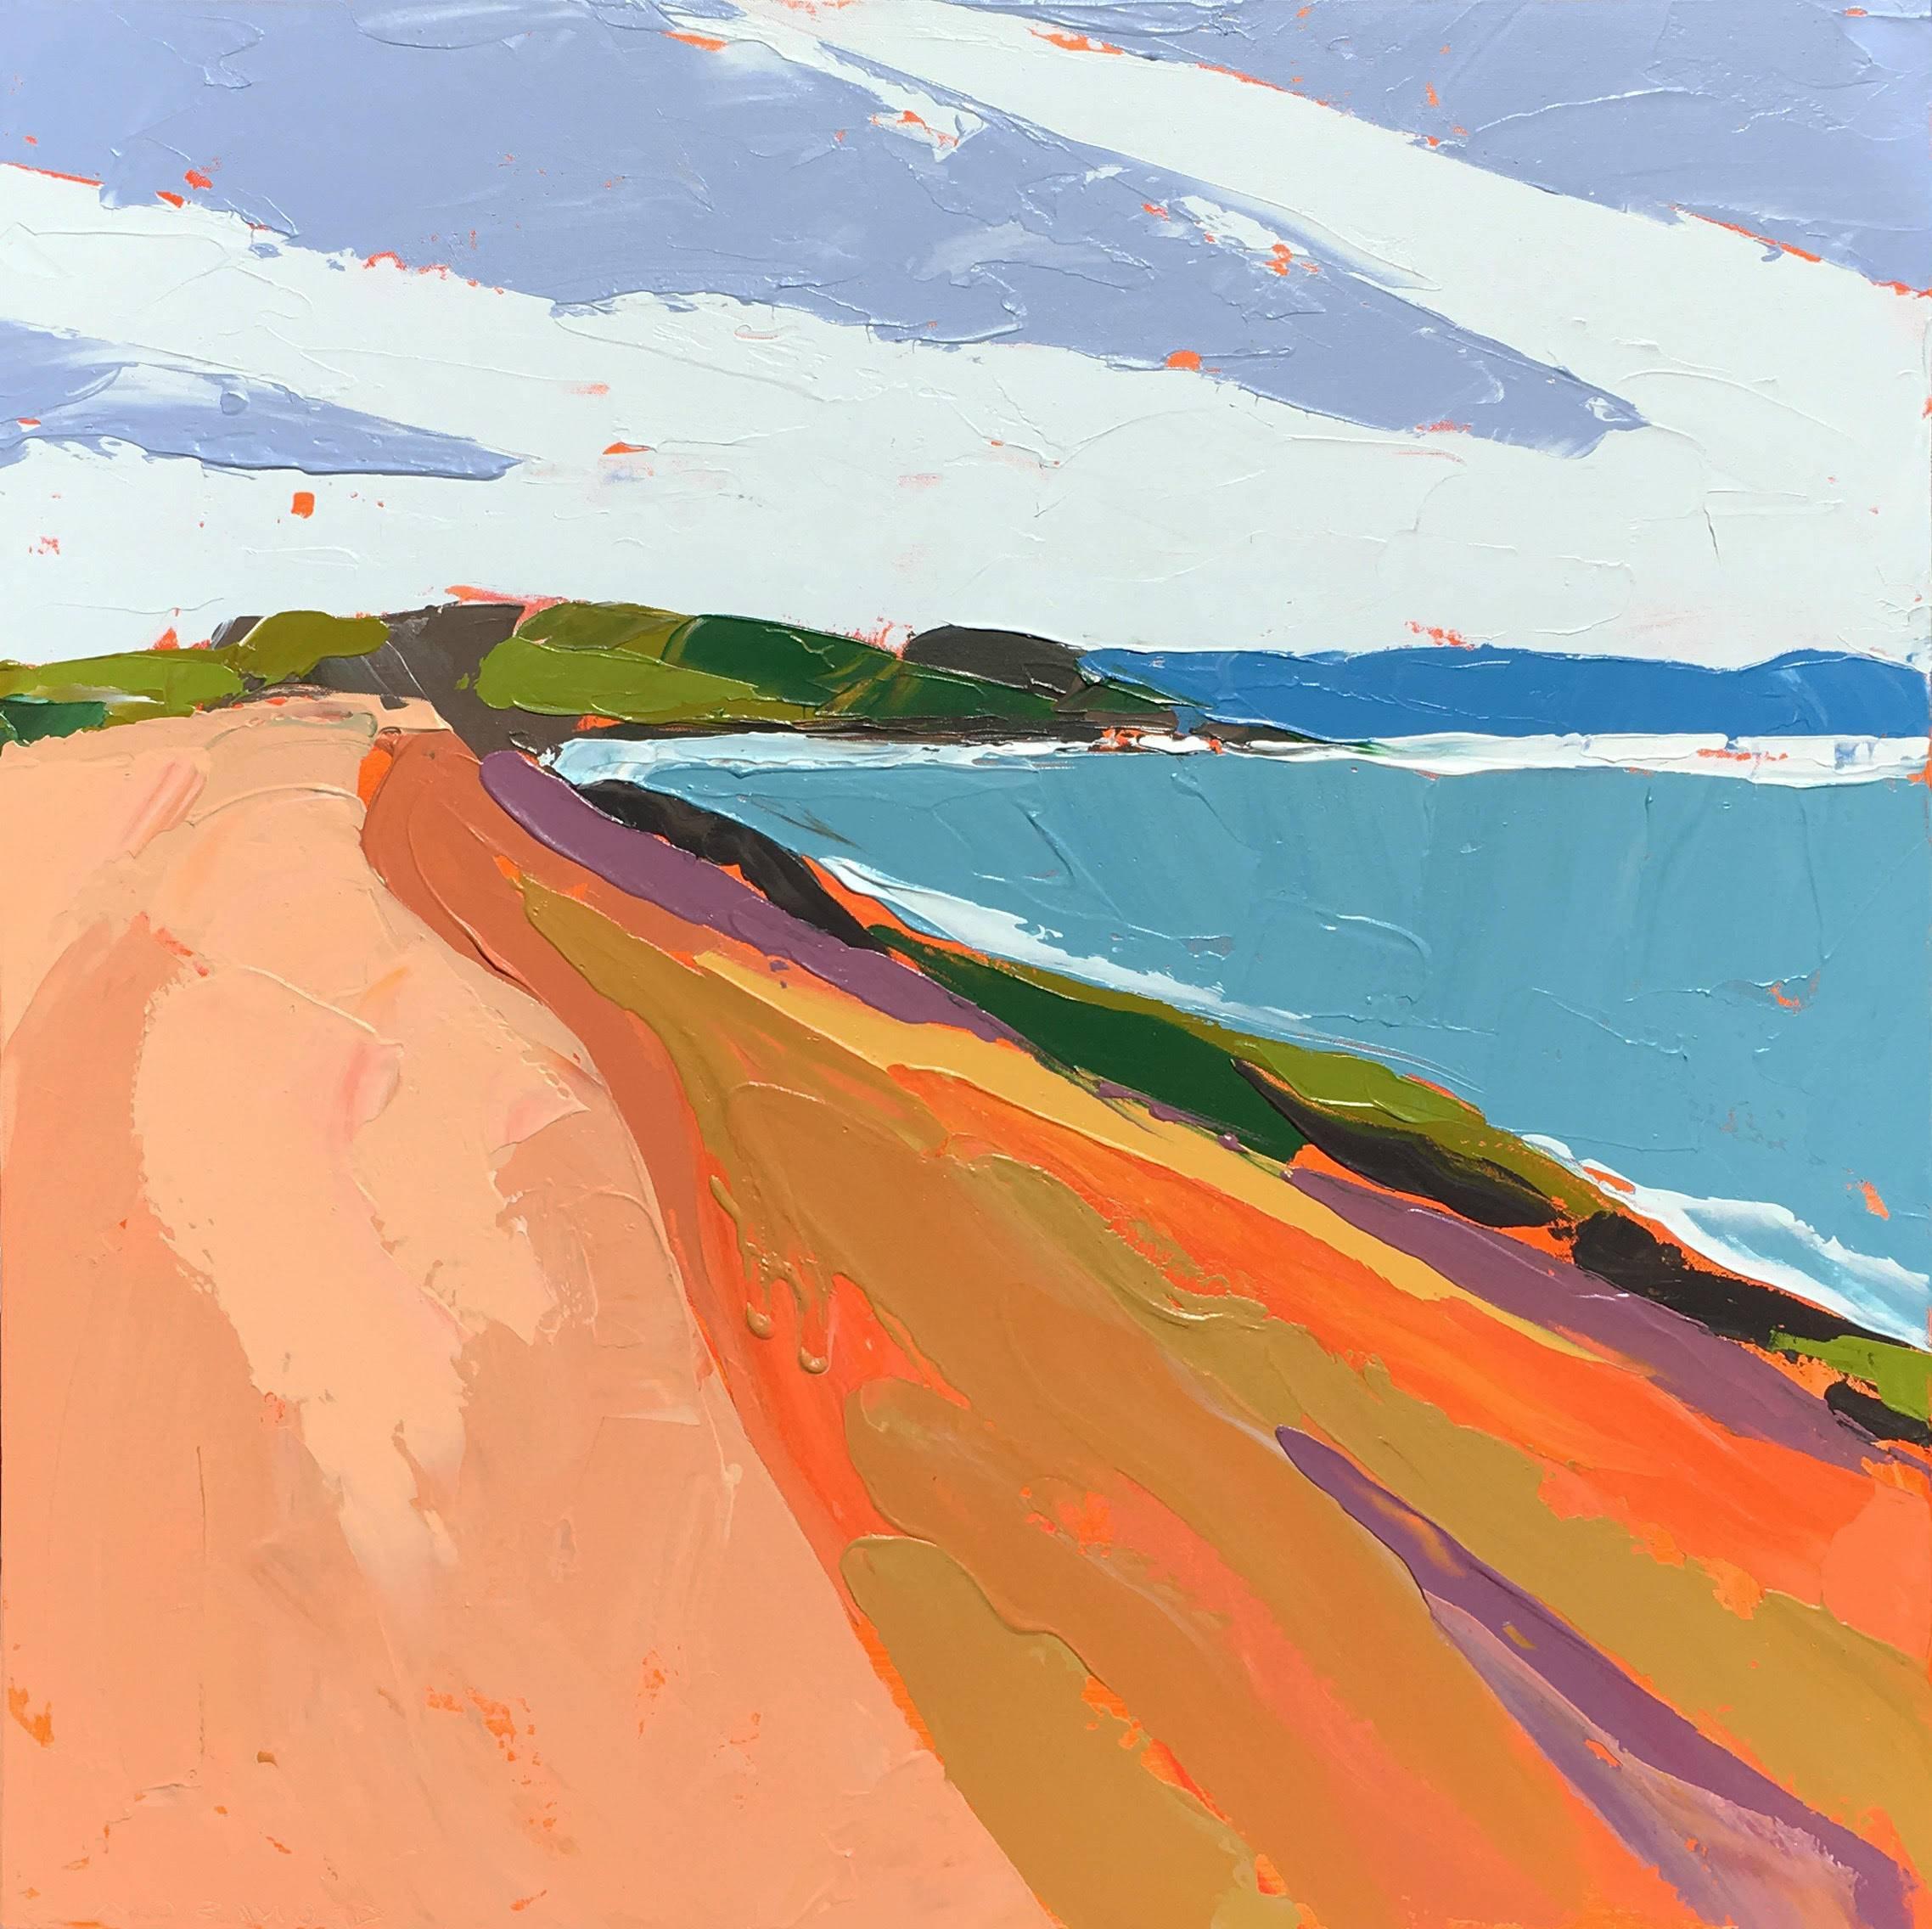 Paul Norwood Landscape Painting - "Above the Shore" Painterly Impasto Landscape with Orange Purple Turquoise Green